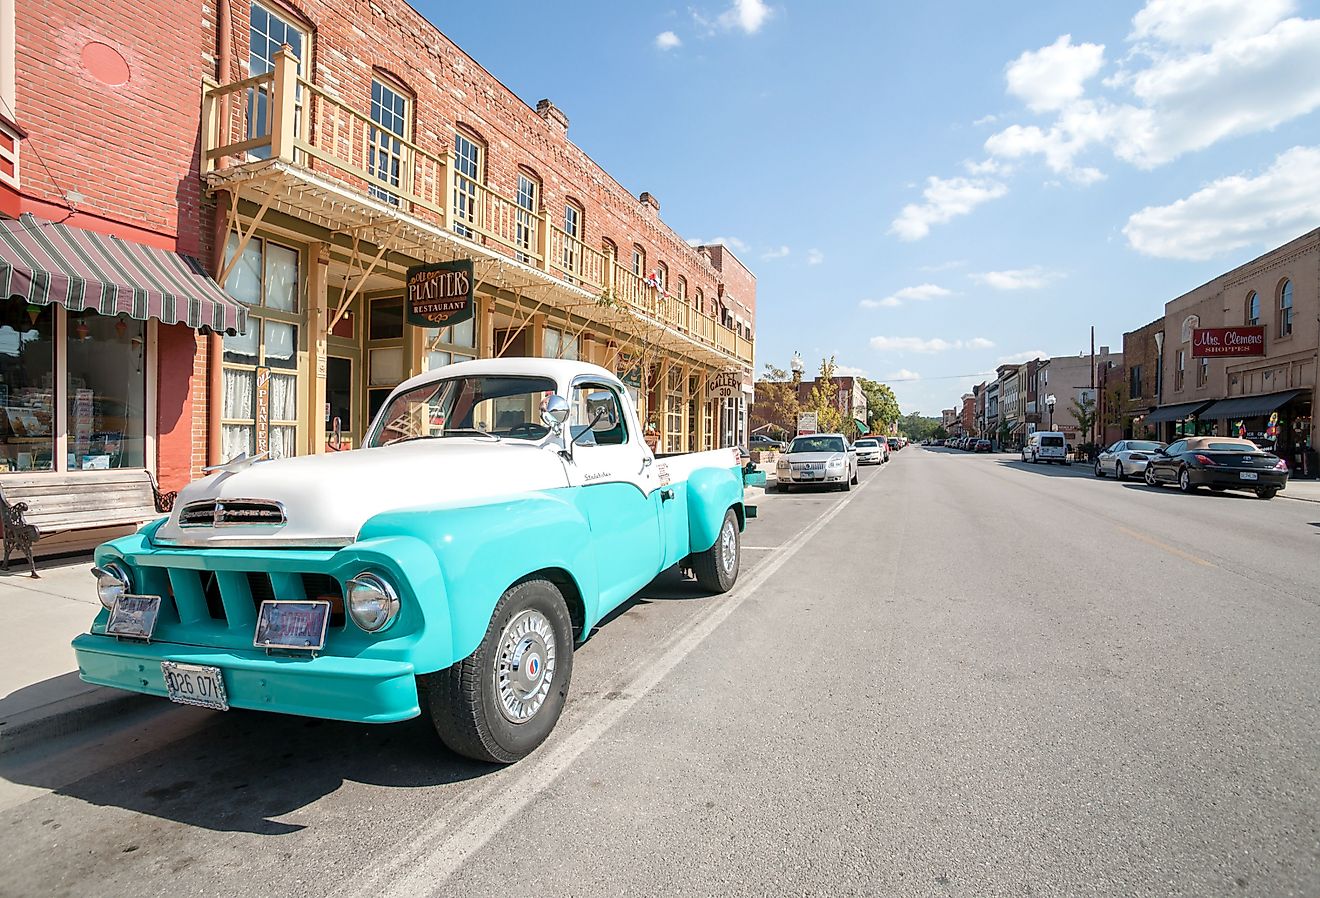 Main Street Hannibal, Missouri USA. The historic hometown of Mark Twain. Image credit Photos BrianScantlebury via Shutterstock.